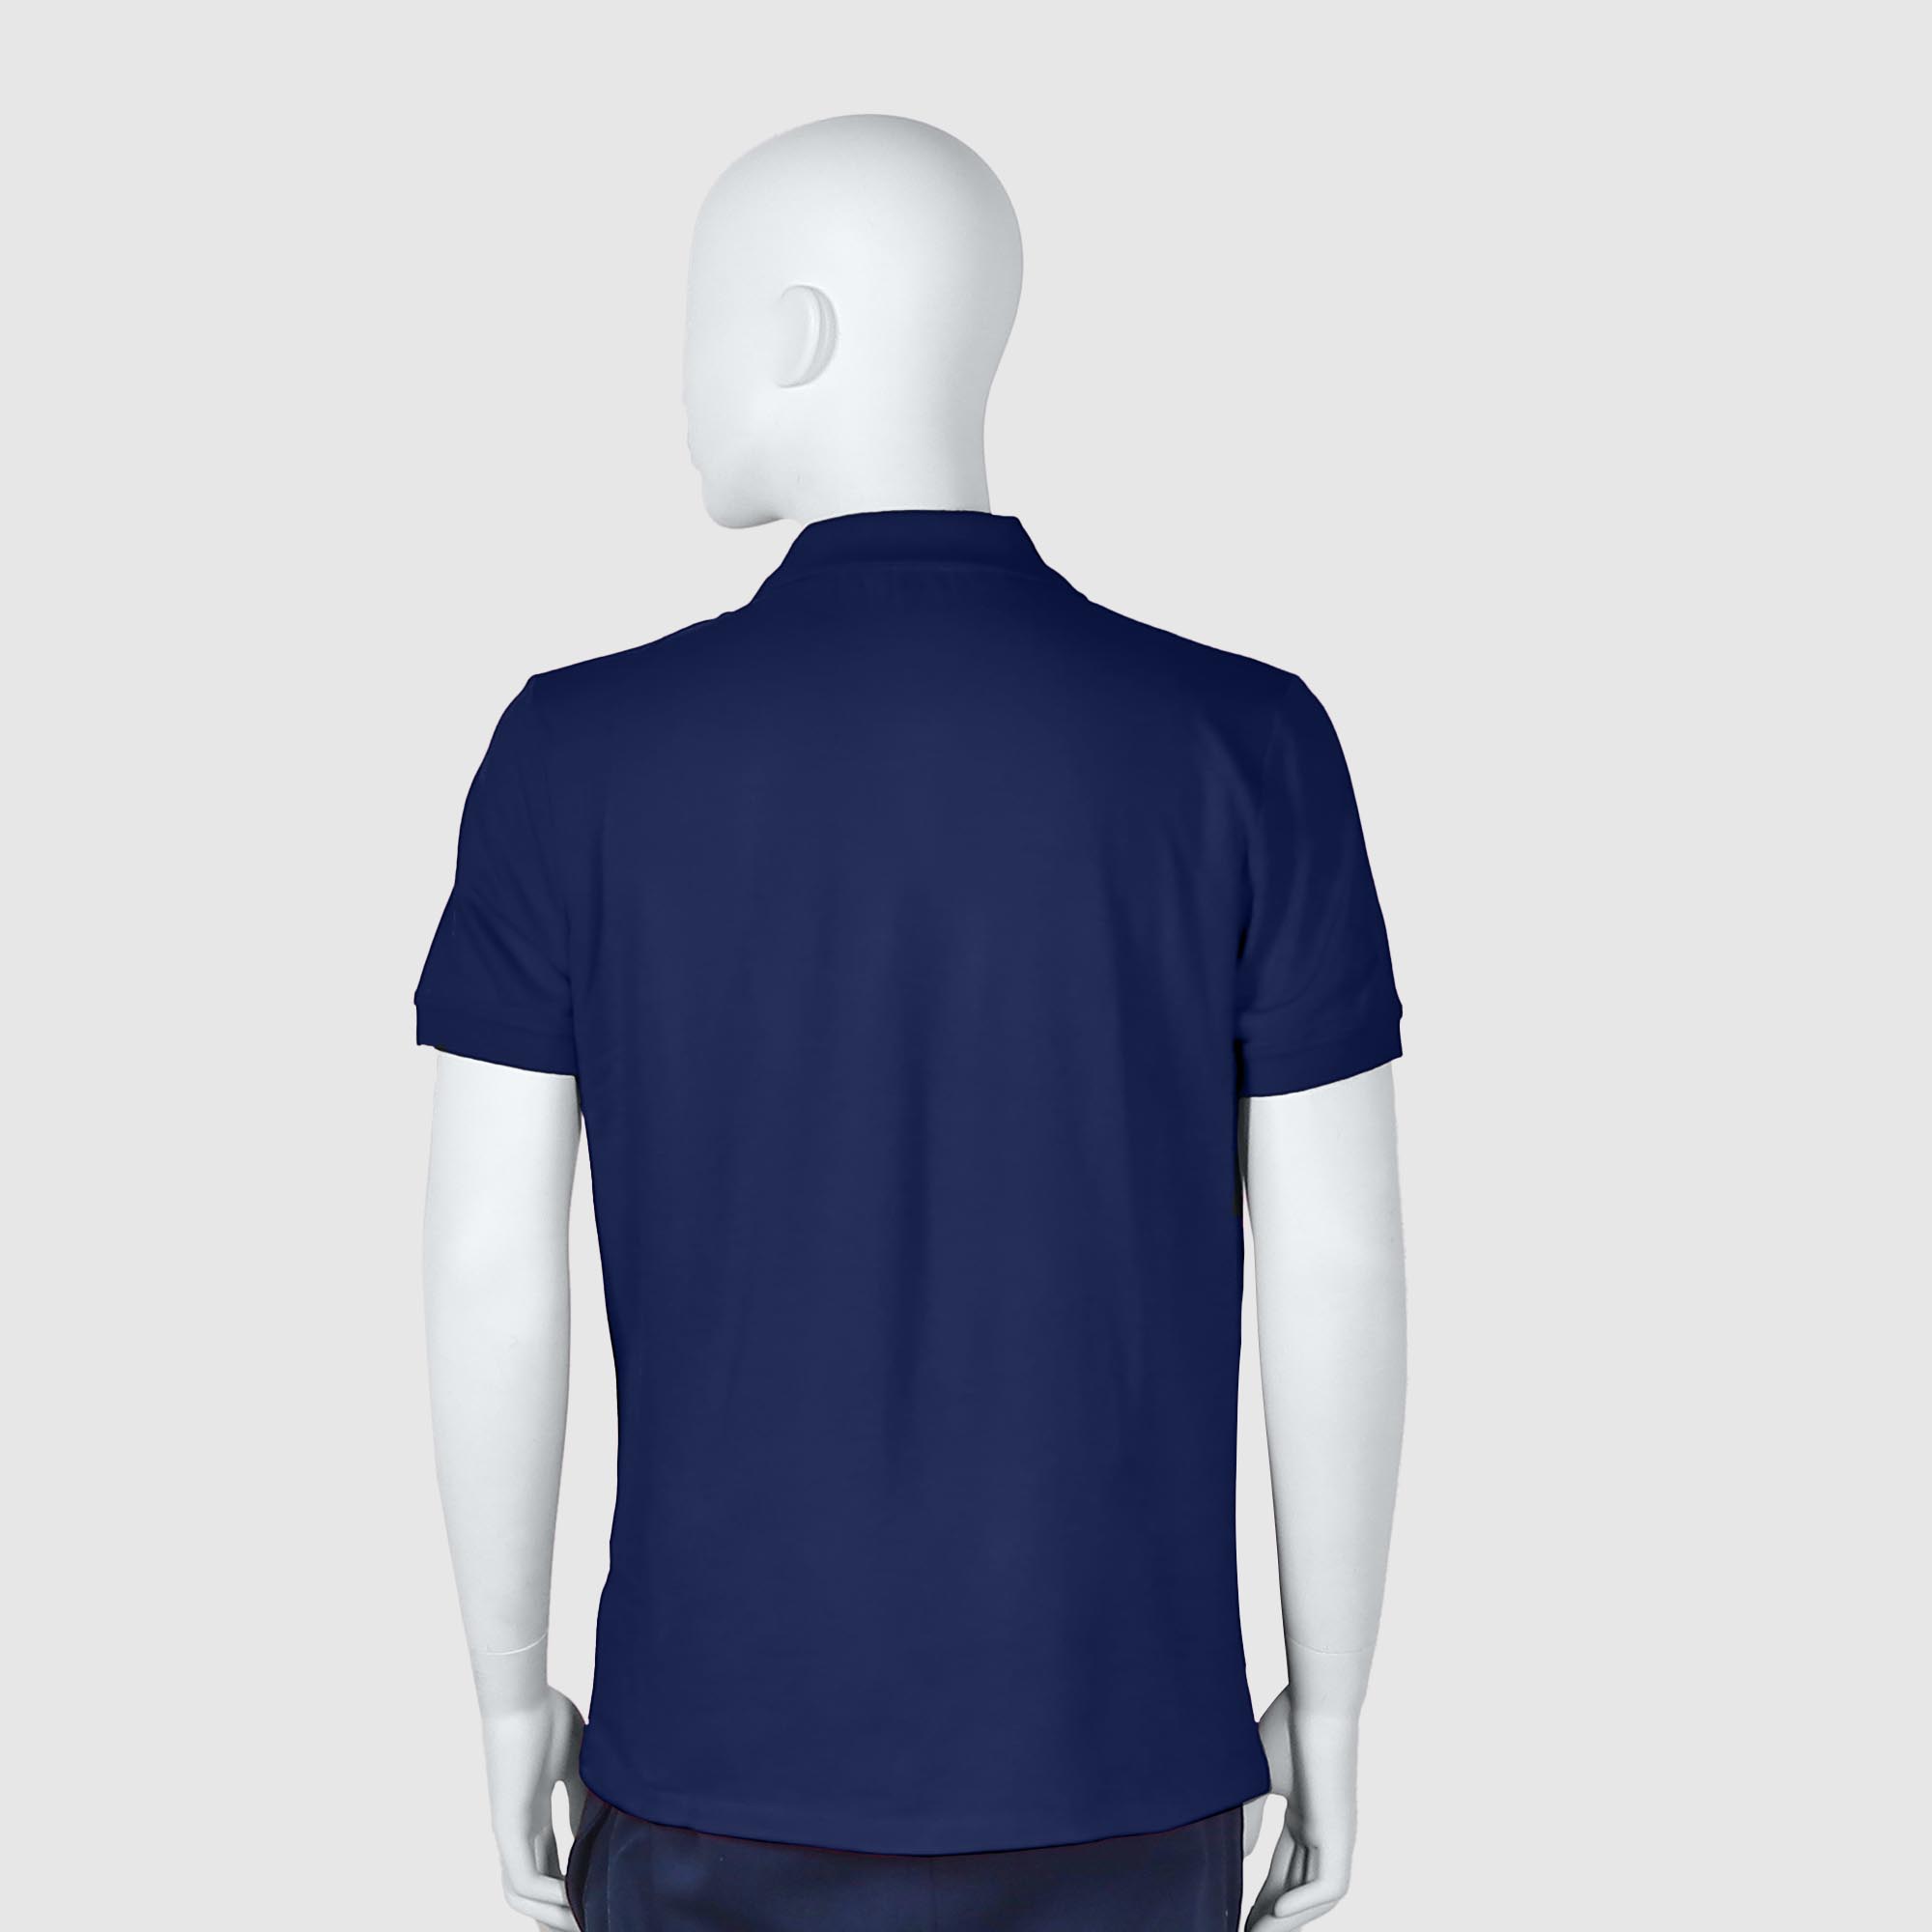 Мужская футболка-поло Diva Teks синяя (DTD-10), цвет синий, размер 44-46 - фото 2